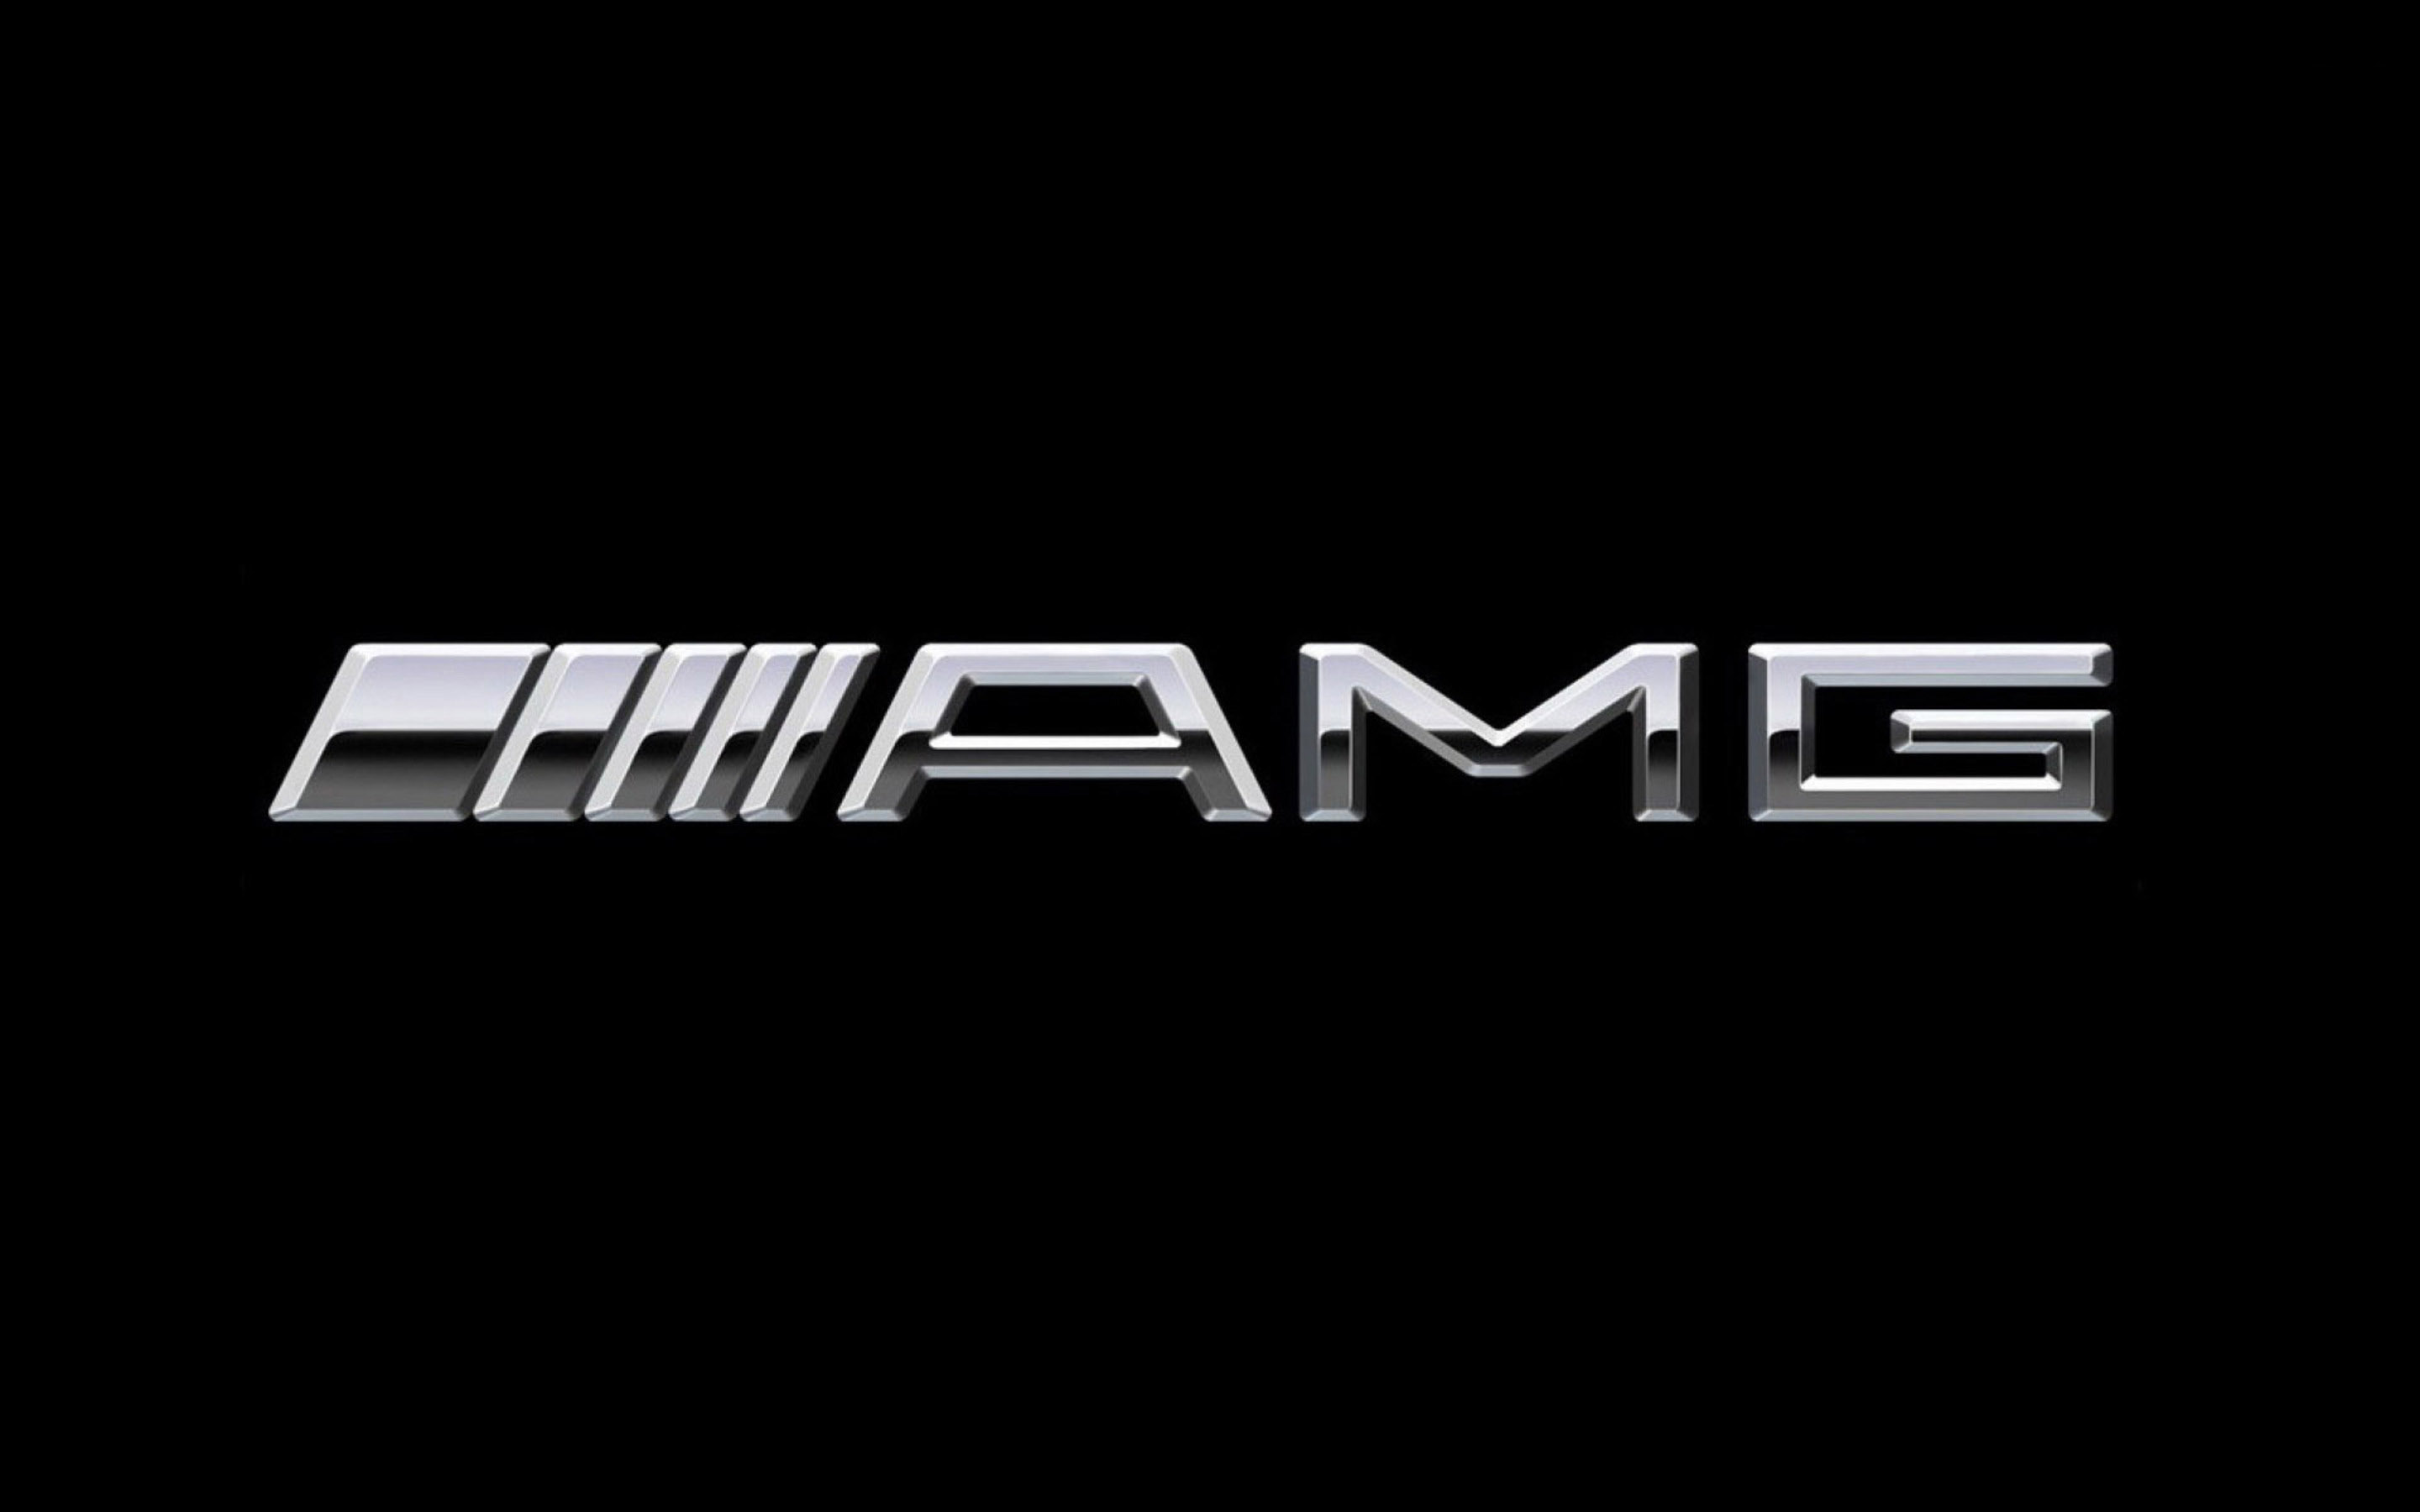 2014 Mercedes Benz AMG Logo Wallpaper